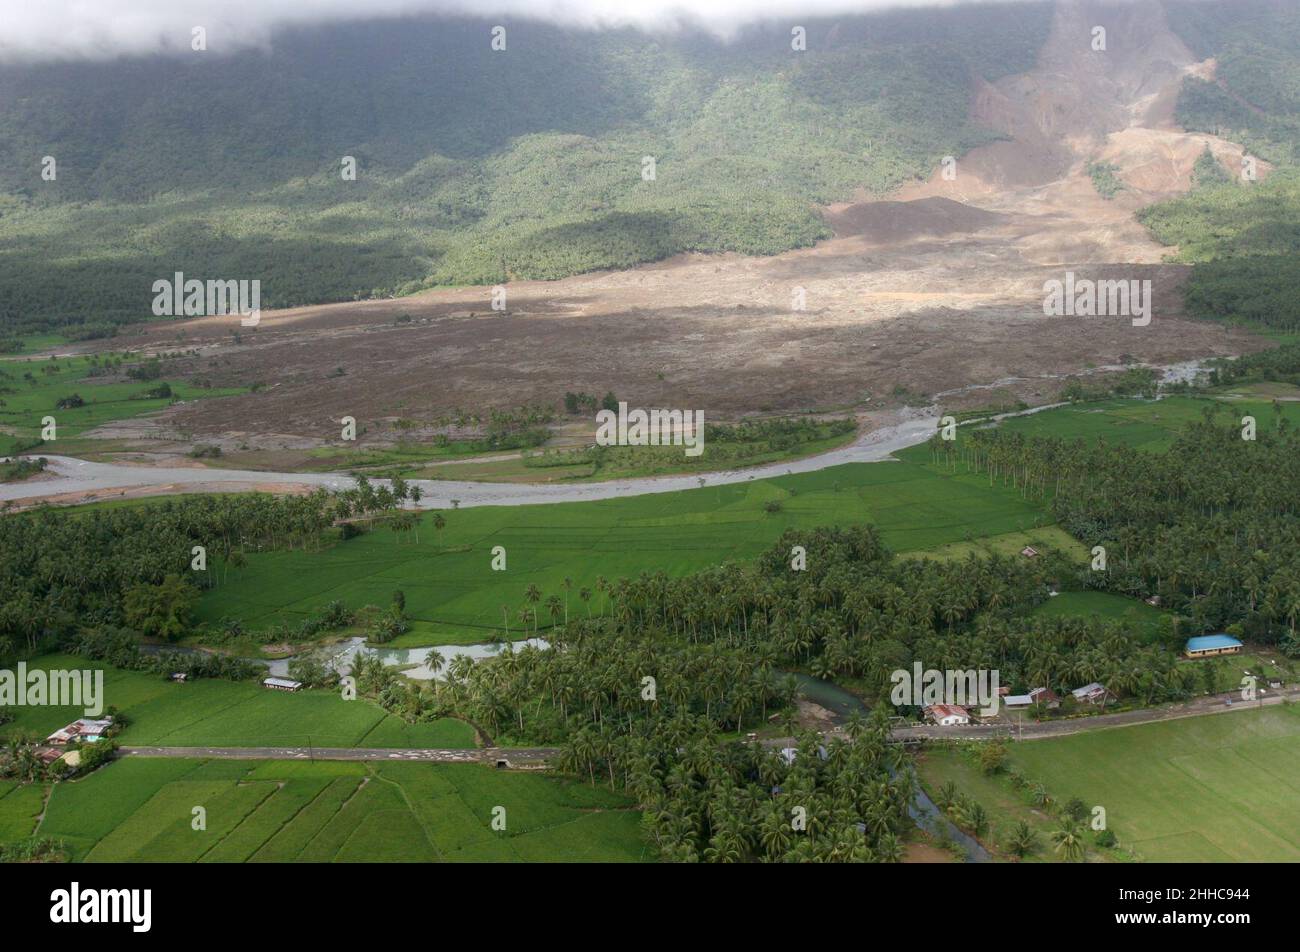 Southern Leyte mudslide 2006 pic01. Stock Photo